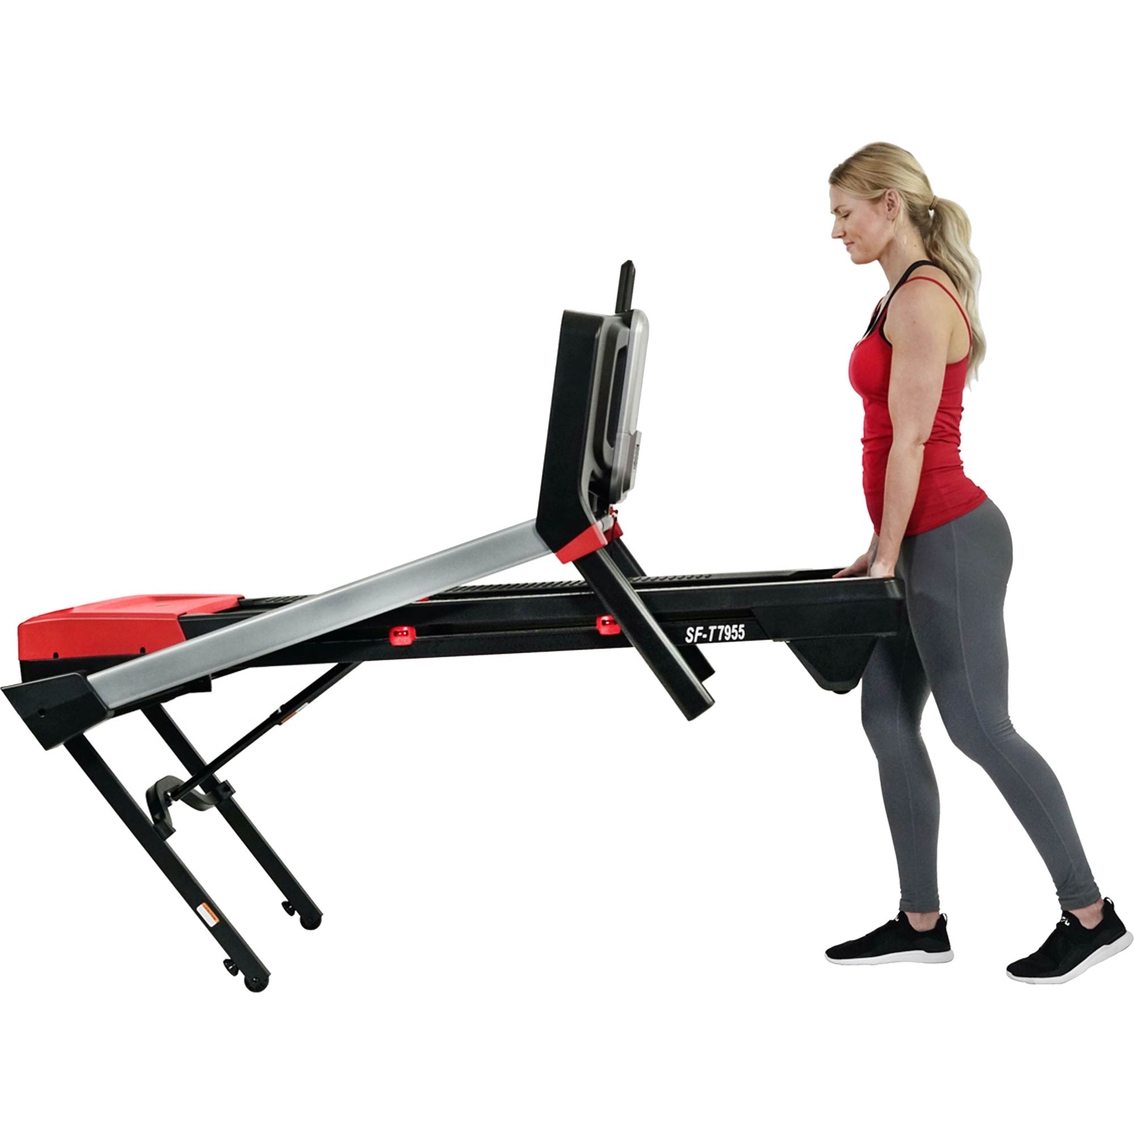 Sunny Health & Fitness Evo-fit Incline Treadmill, Cardio Equipment, Sports & Outdoors